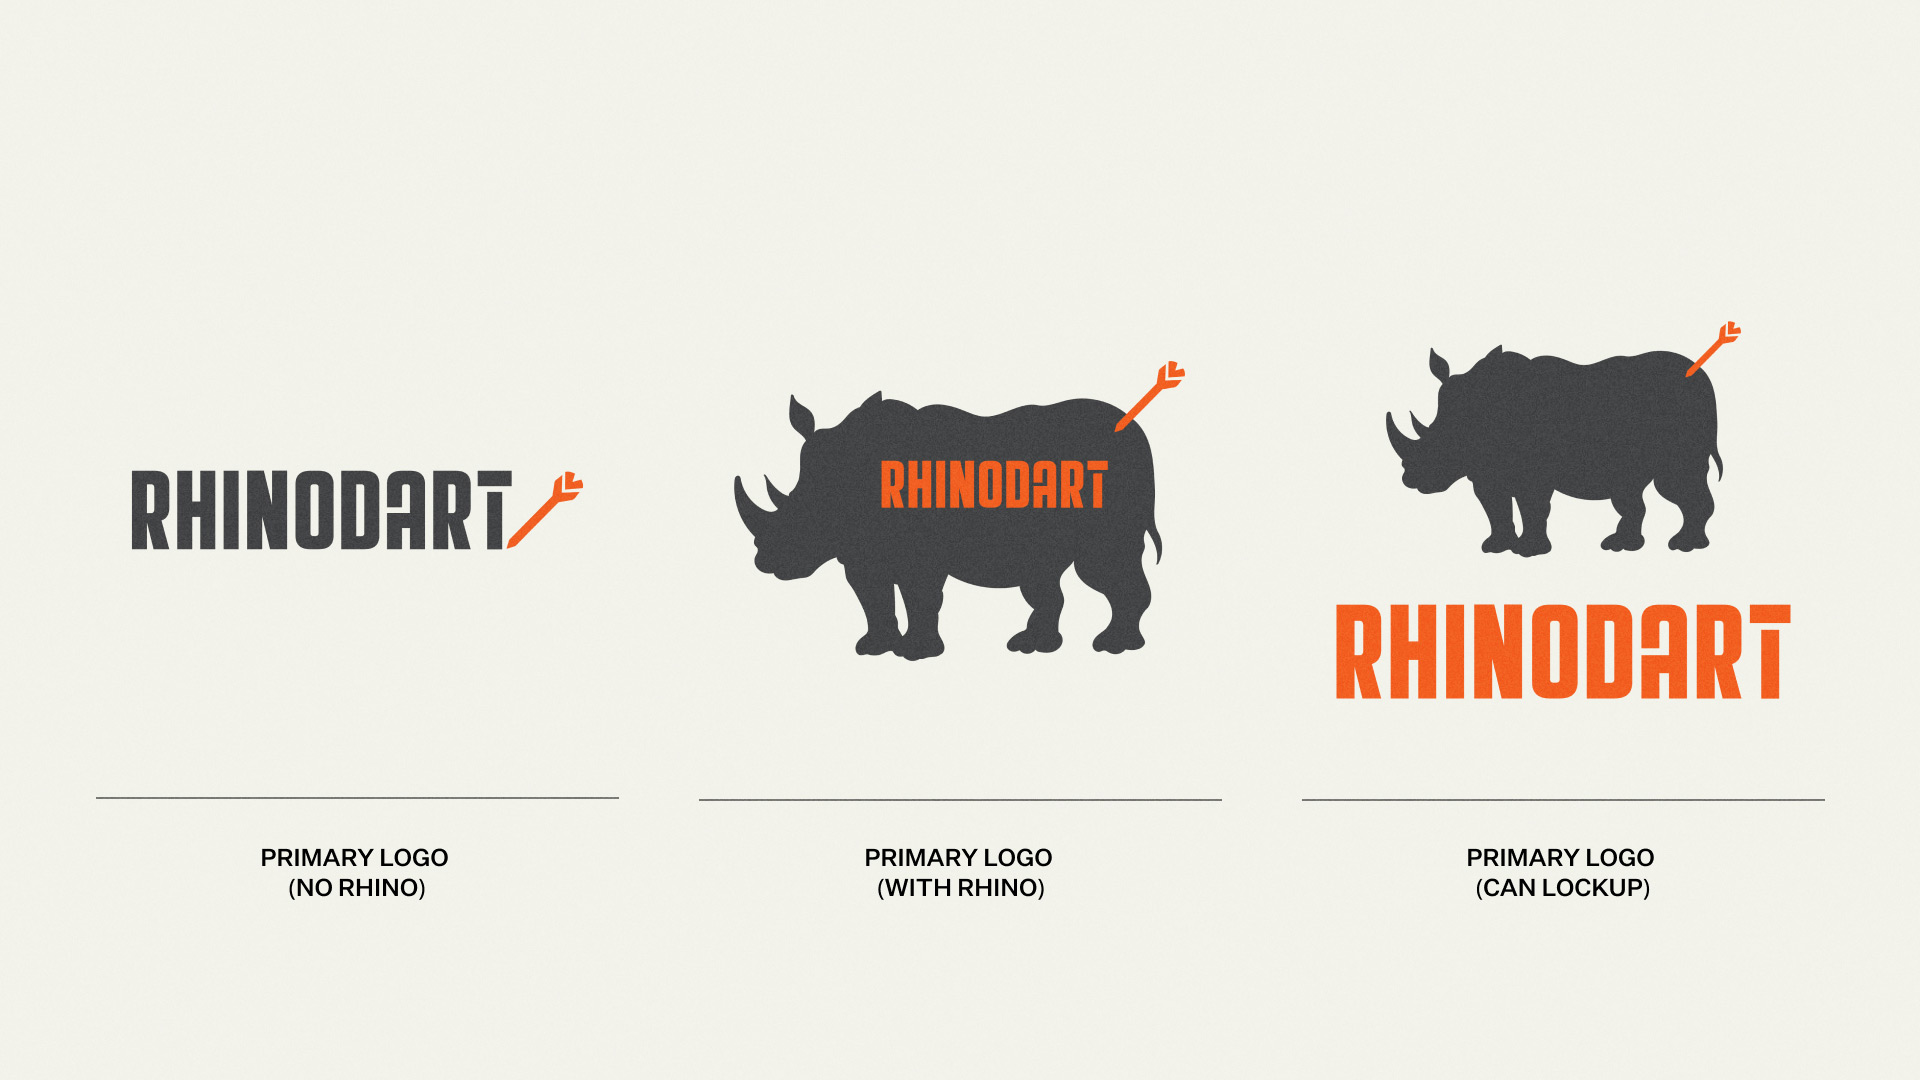 Different ways to show the primary Rhinodart logo